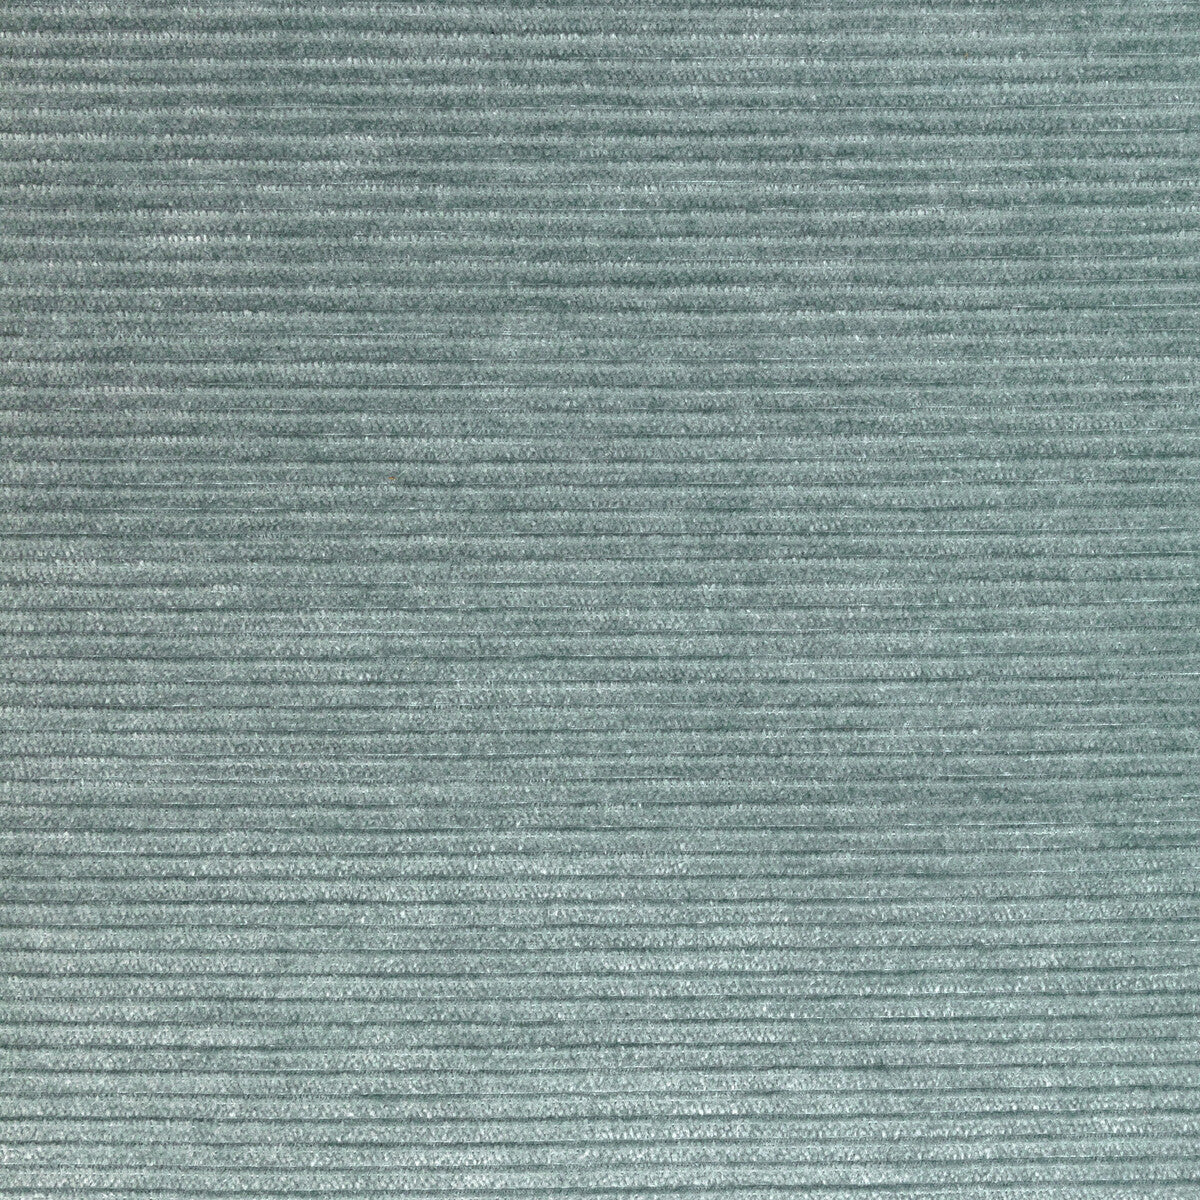 Kravet Smart fabric in 36651-115 color - pattern 36651.115.0 - by Kravet Smart in the Performance Kravetarmor collection